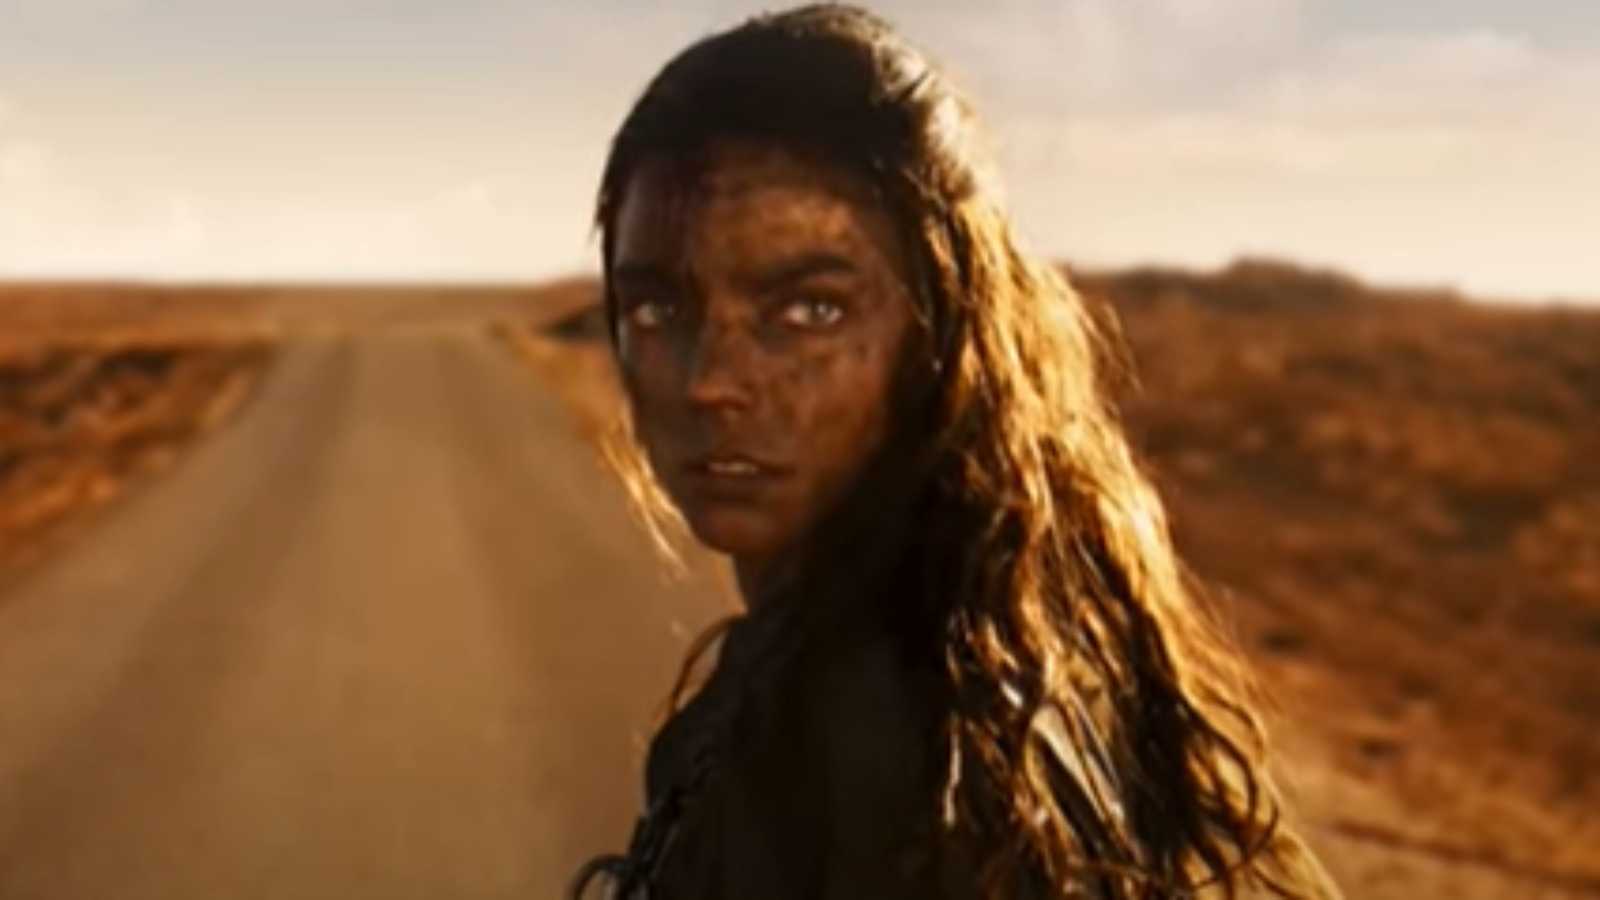 Furiosa: A Mad Max Saga trailer: Chris Hemsworth and Anya Taylor-Joy have an epic face-off in this actioner flick